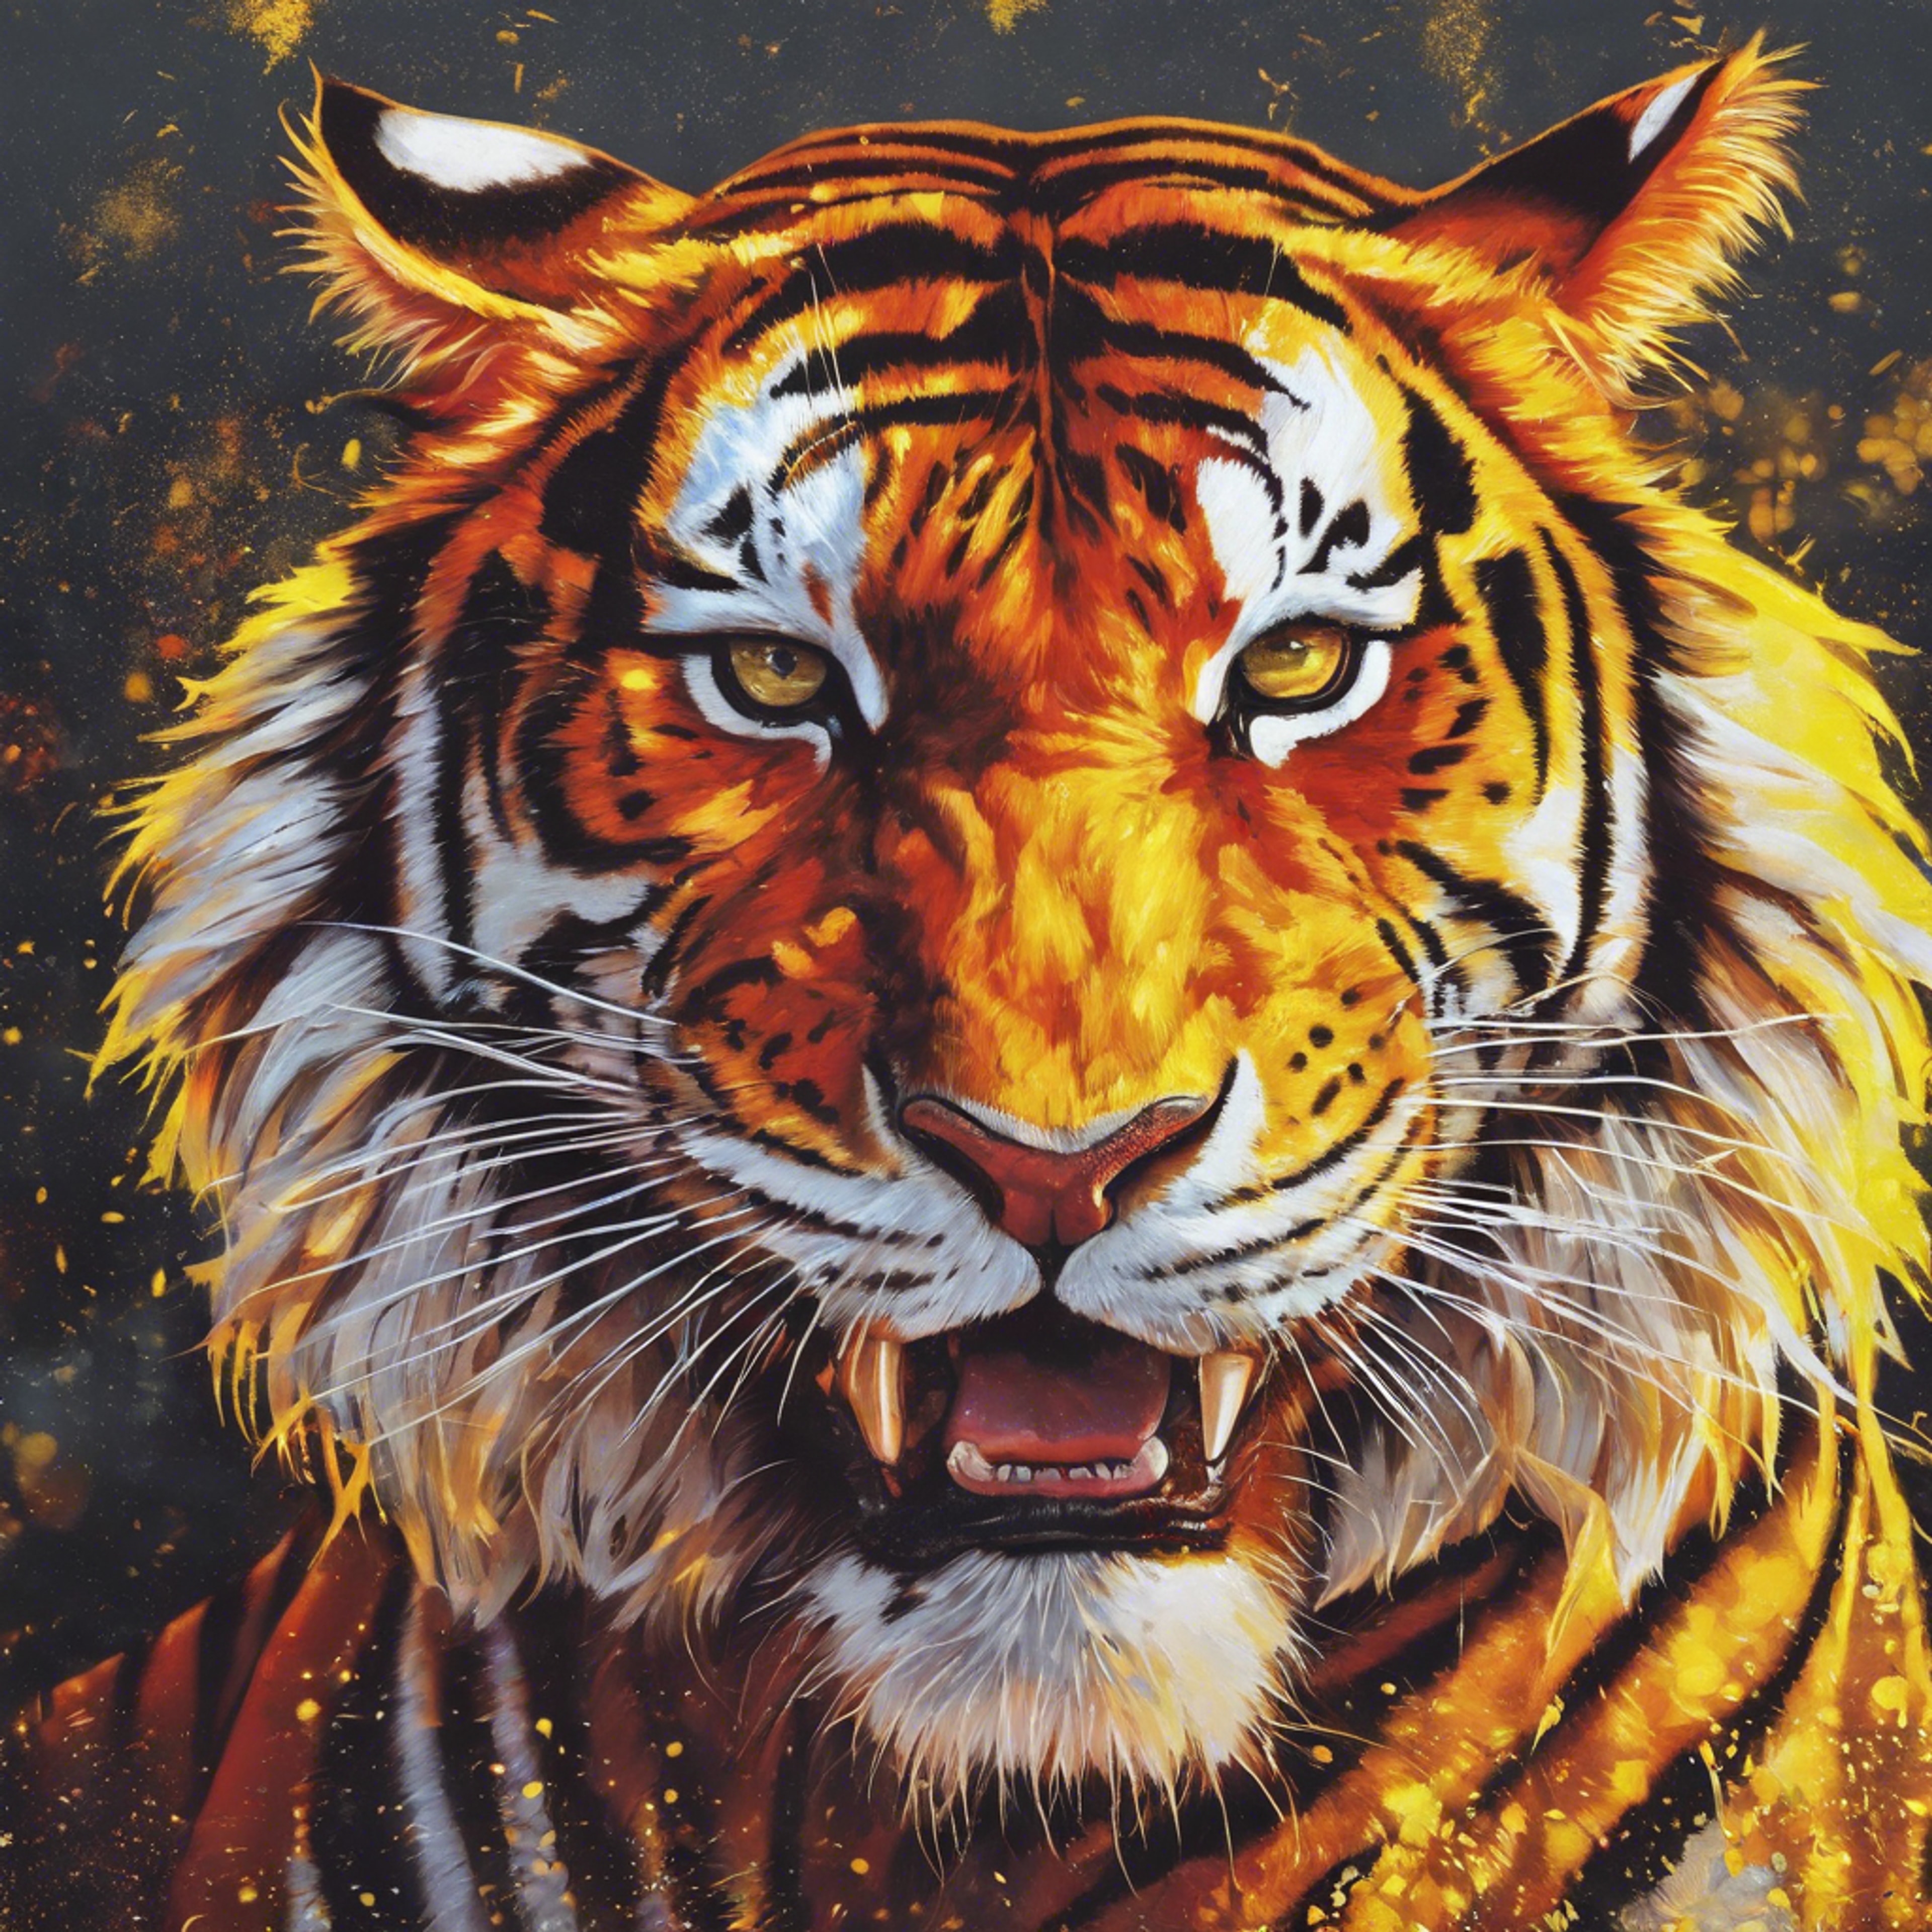 A mural featuring a cool red tiger roaring, under a bright yellow sun, symbolizing strength and energy. Fond d'écran[b92d4e06da1a4dd6b9b7]